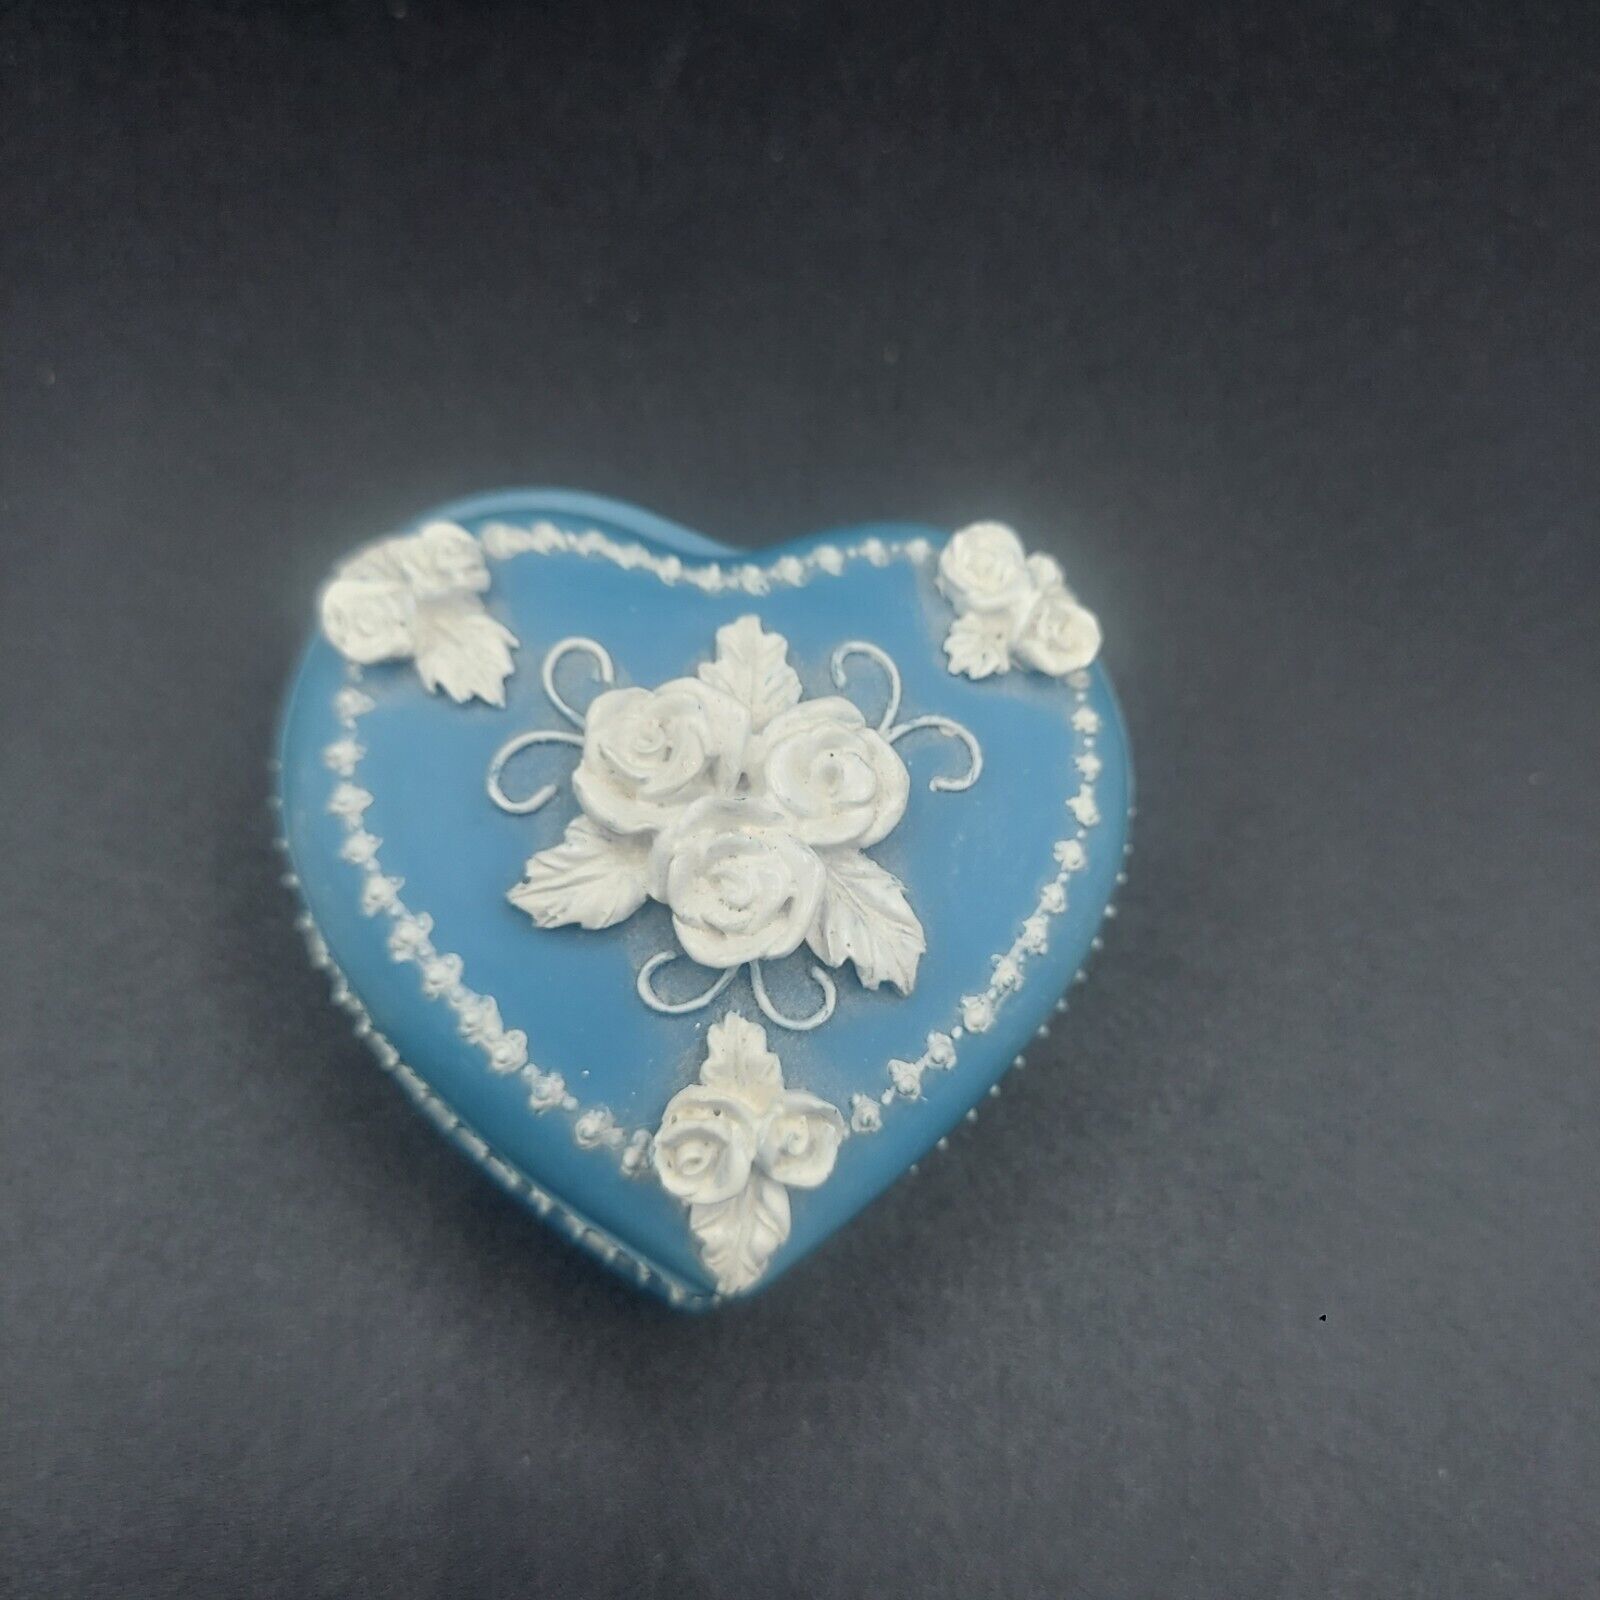 Blue And White Heart-shaped Resin Trinket Box. Looks like Wedgewood